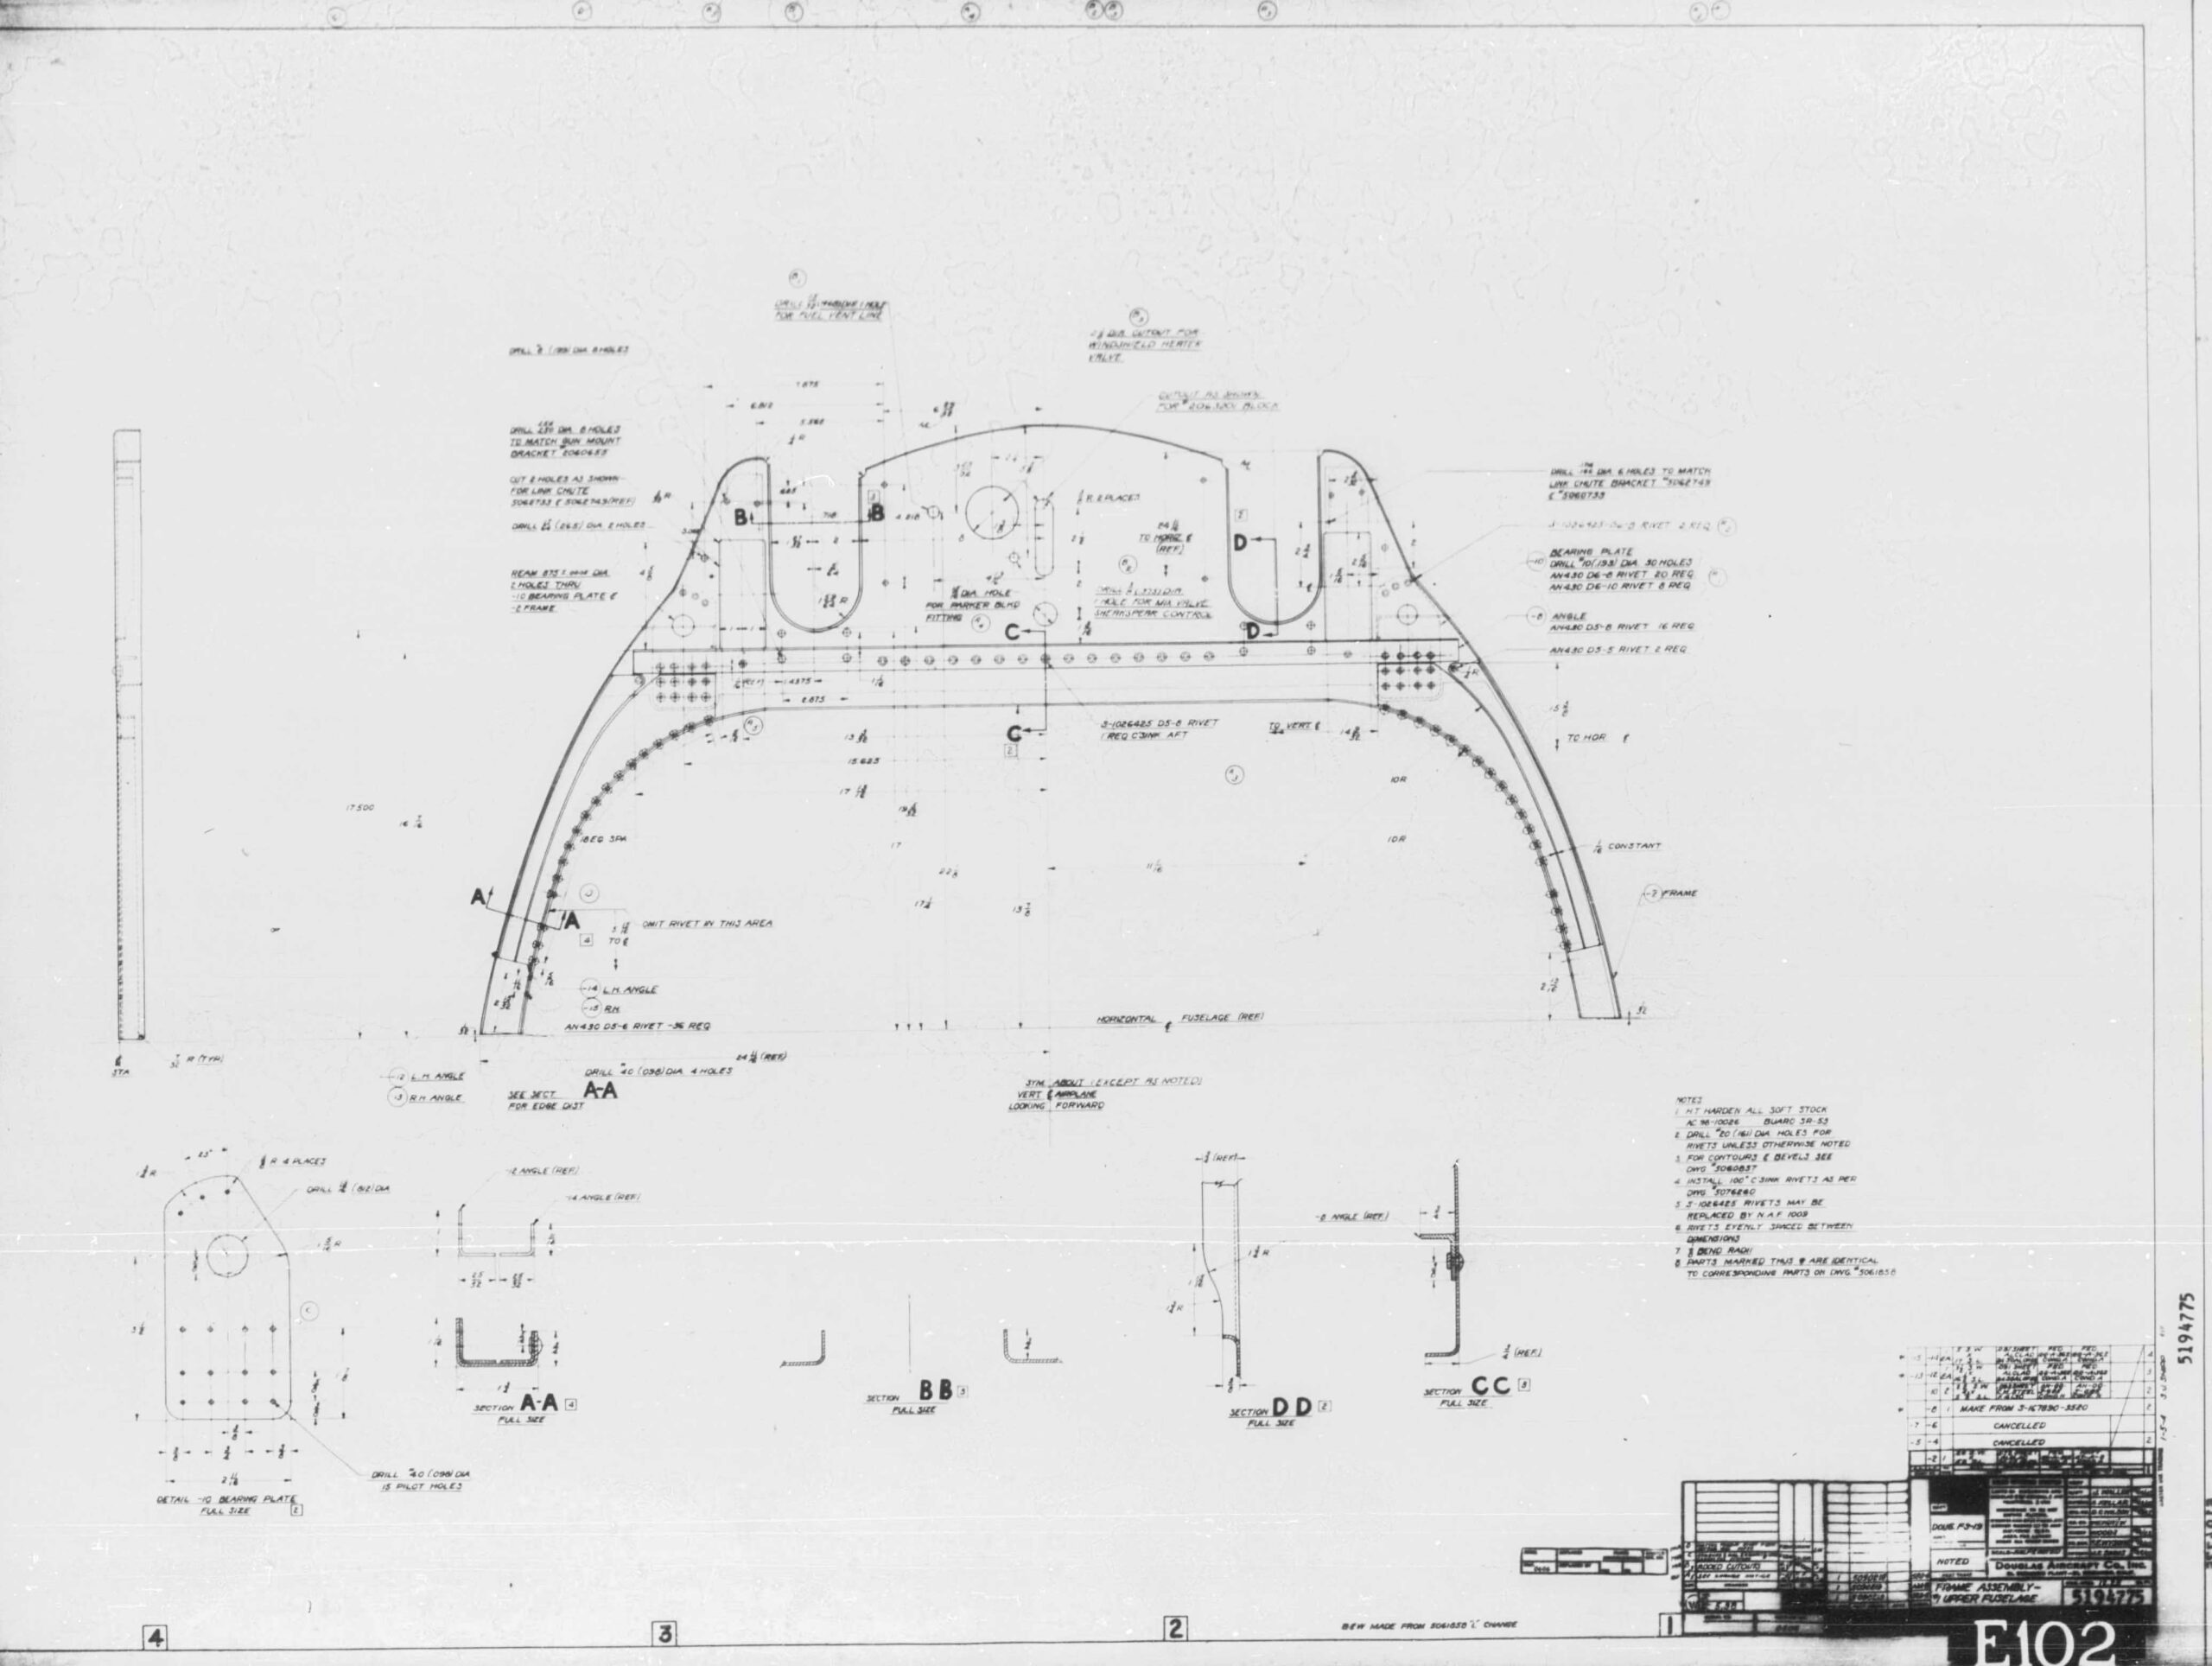 Douglas Sbd Frame 1 Upper Fuselage Assembly Drawing